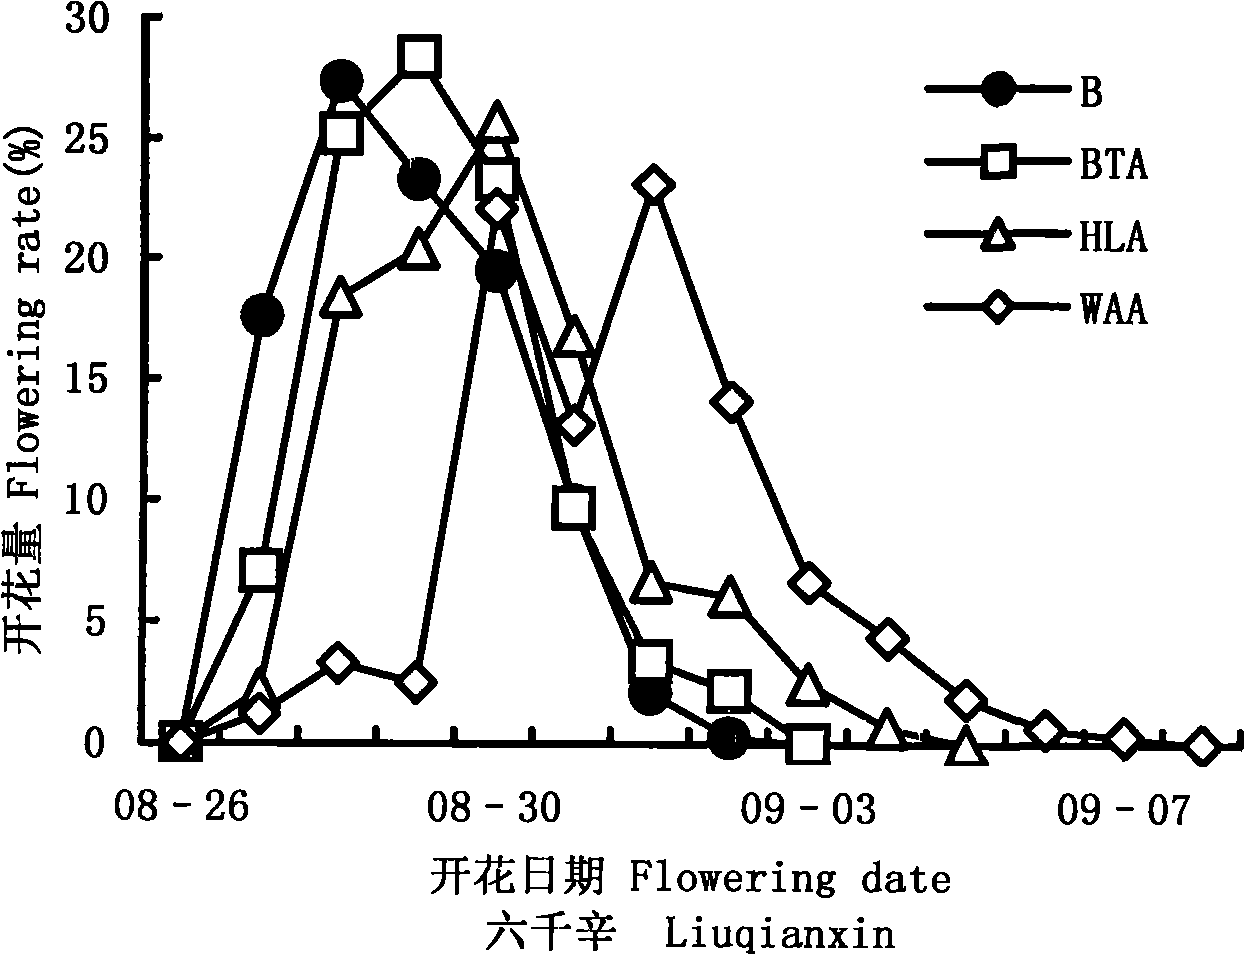 Honglian type method for breeding japonica hybrid rice